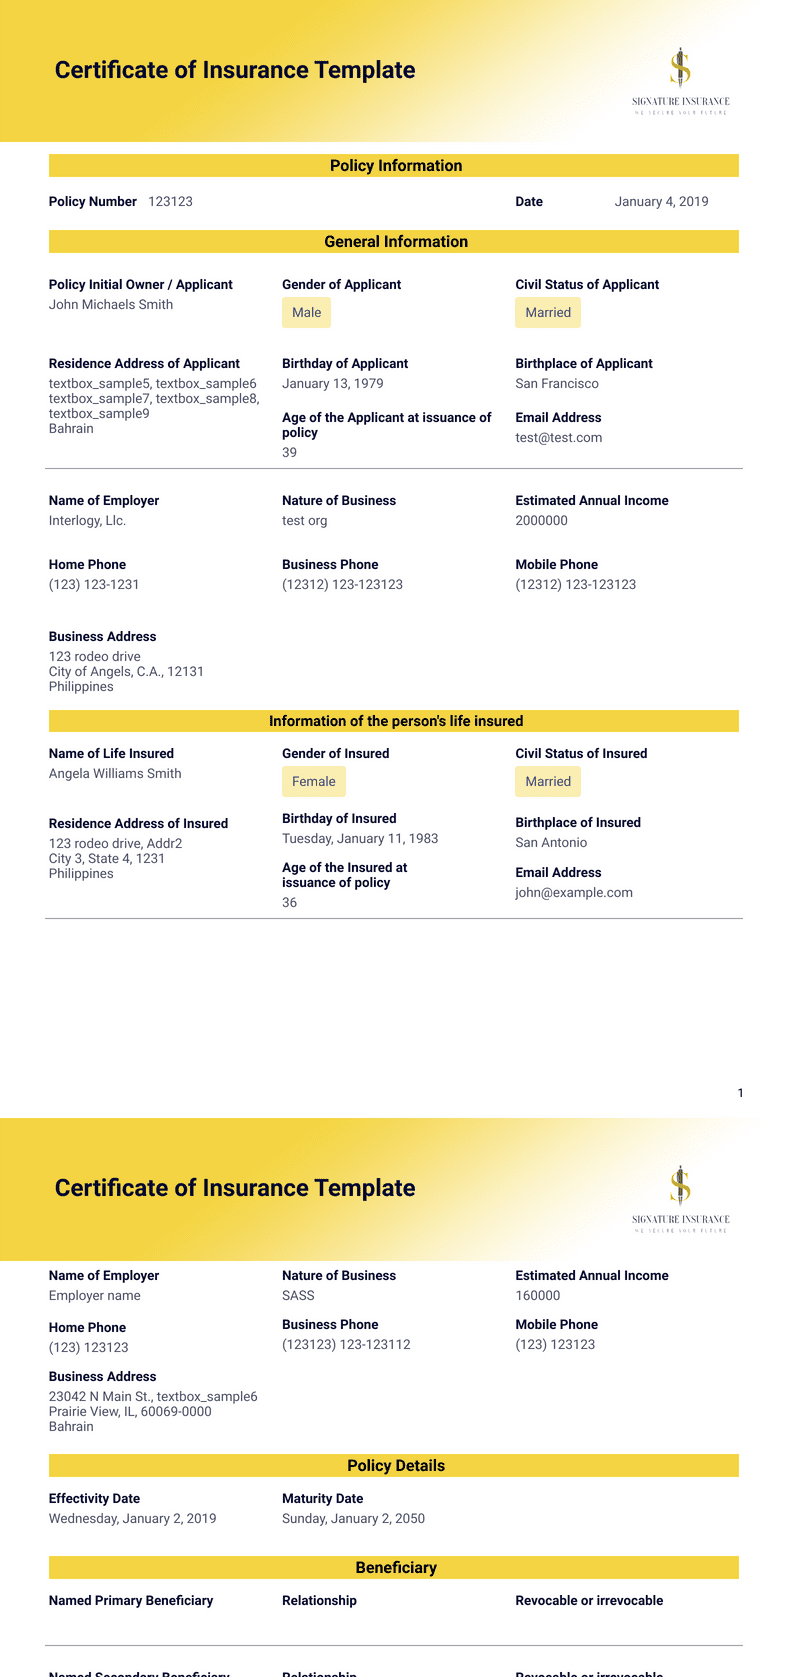 PDF Templates: Certificate of Insurance Template